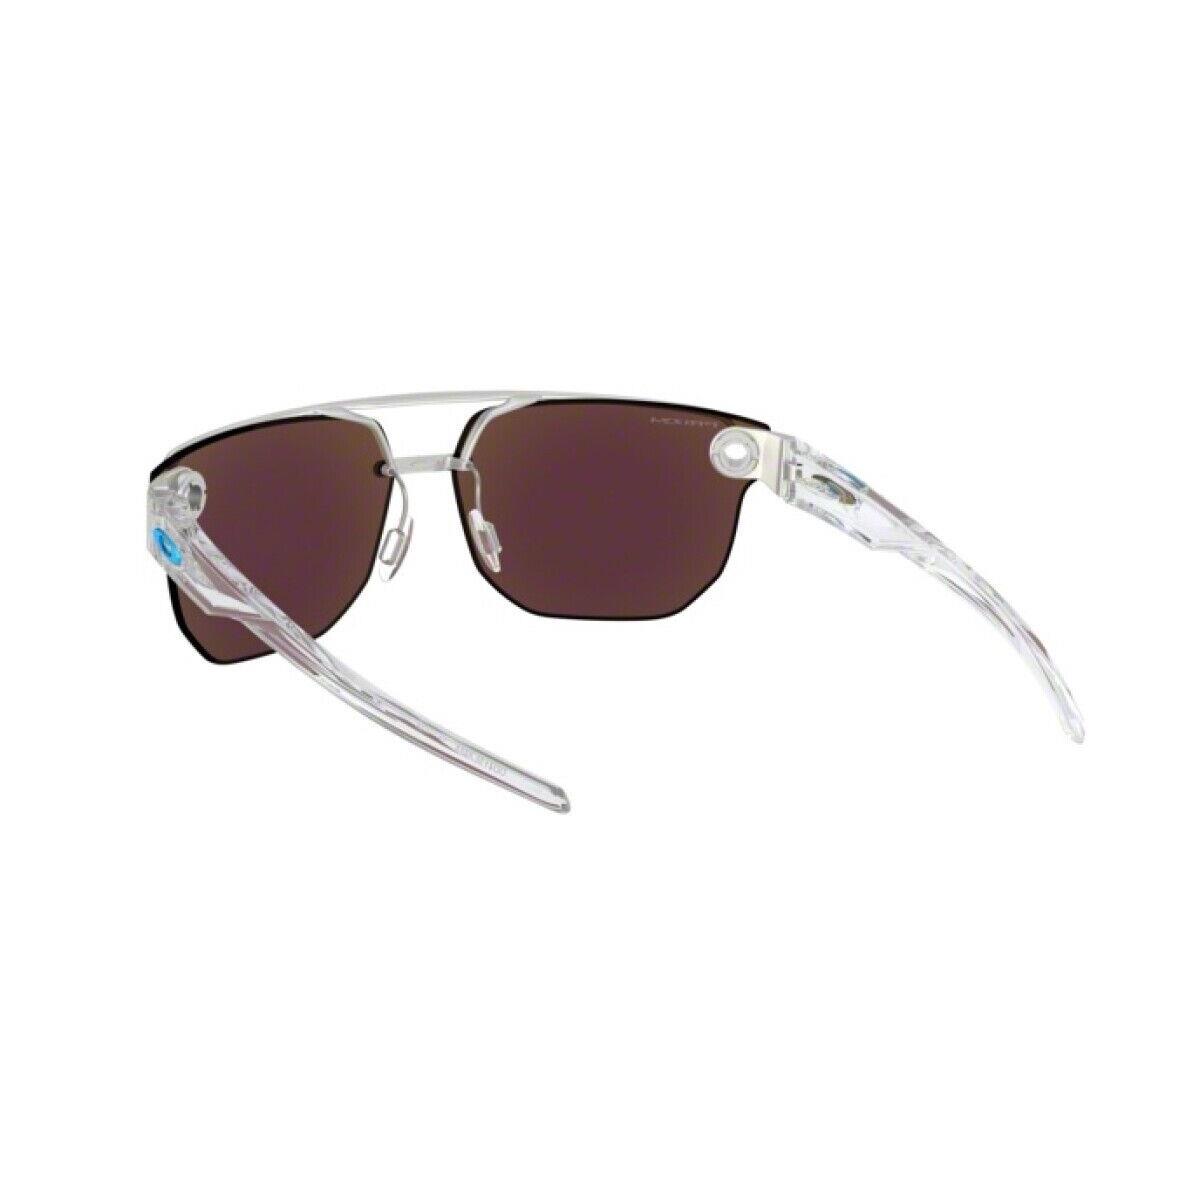 Oakley Sunglasses Chrystl Satin Chrome w Prizm Sapphire OO4136-08 67mm -  Oakley sunglasses - 888392427076 | Fash Brands